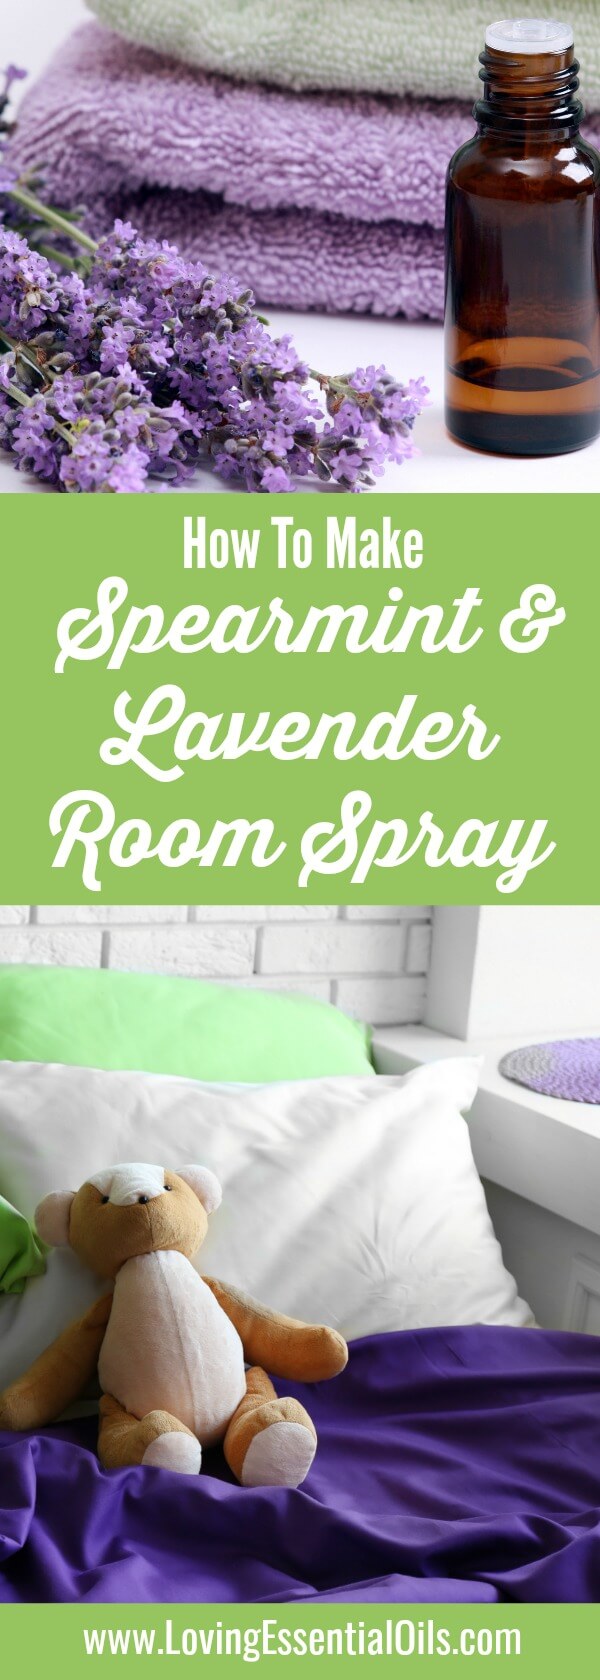 DIY Spearmint and Lavender essential oil room spray recipe by Loving Essential Oils